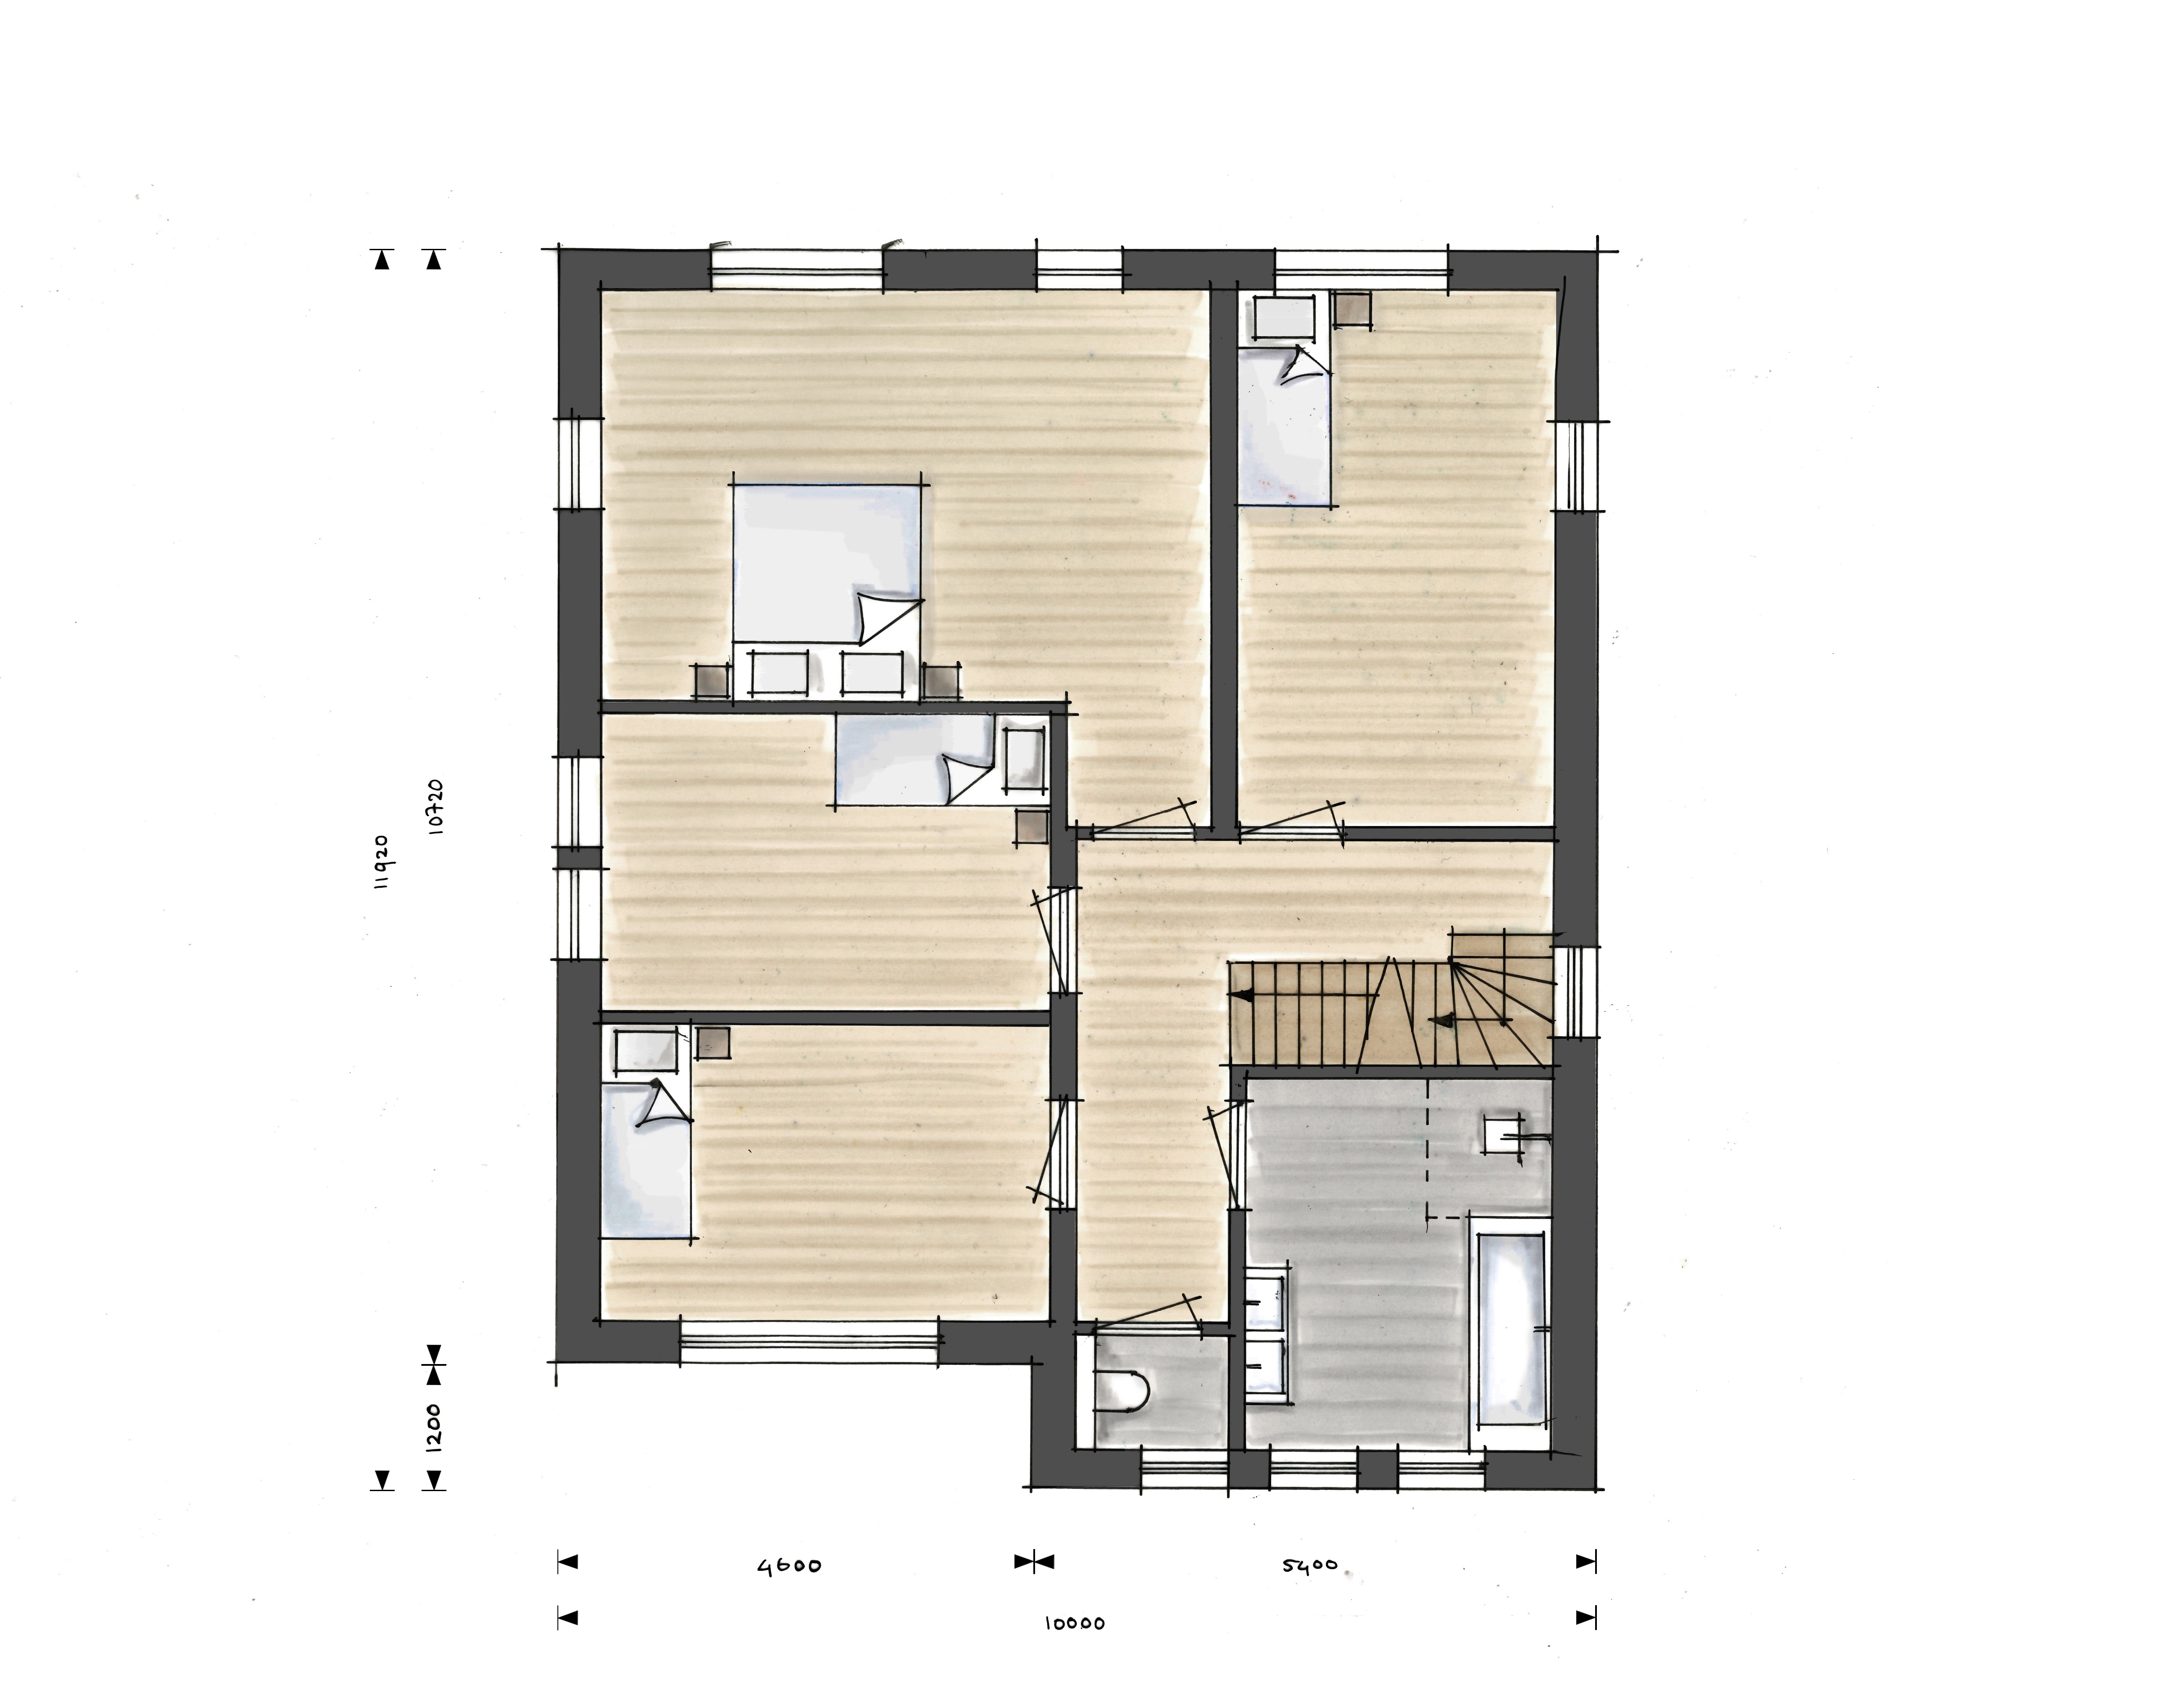 Foto: Huis bouwen  ndash  villatype Kolibrie plattegrond verdieping   Architectuurwonen